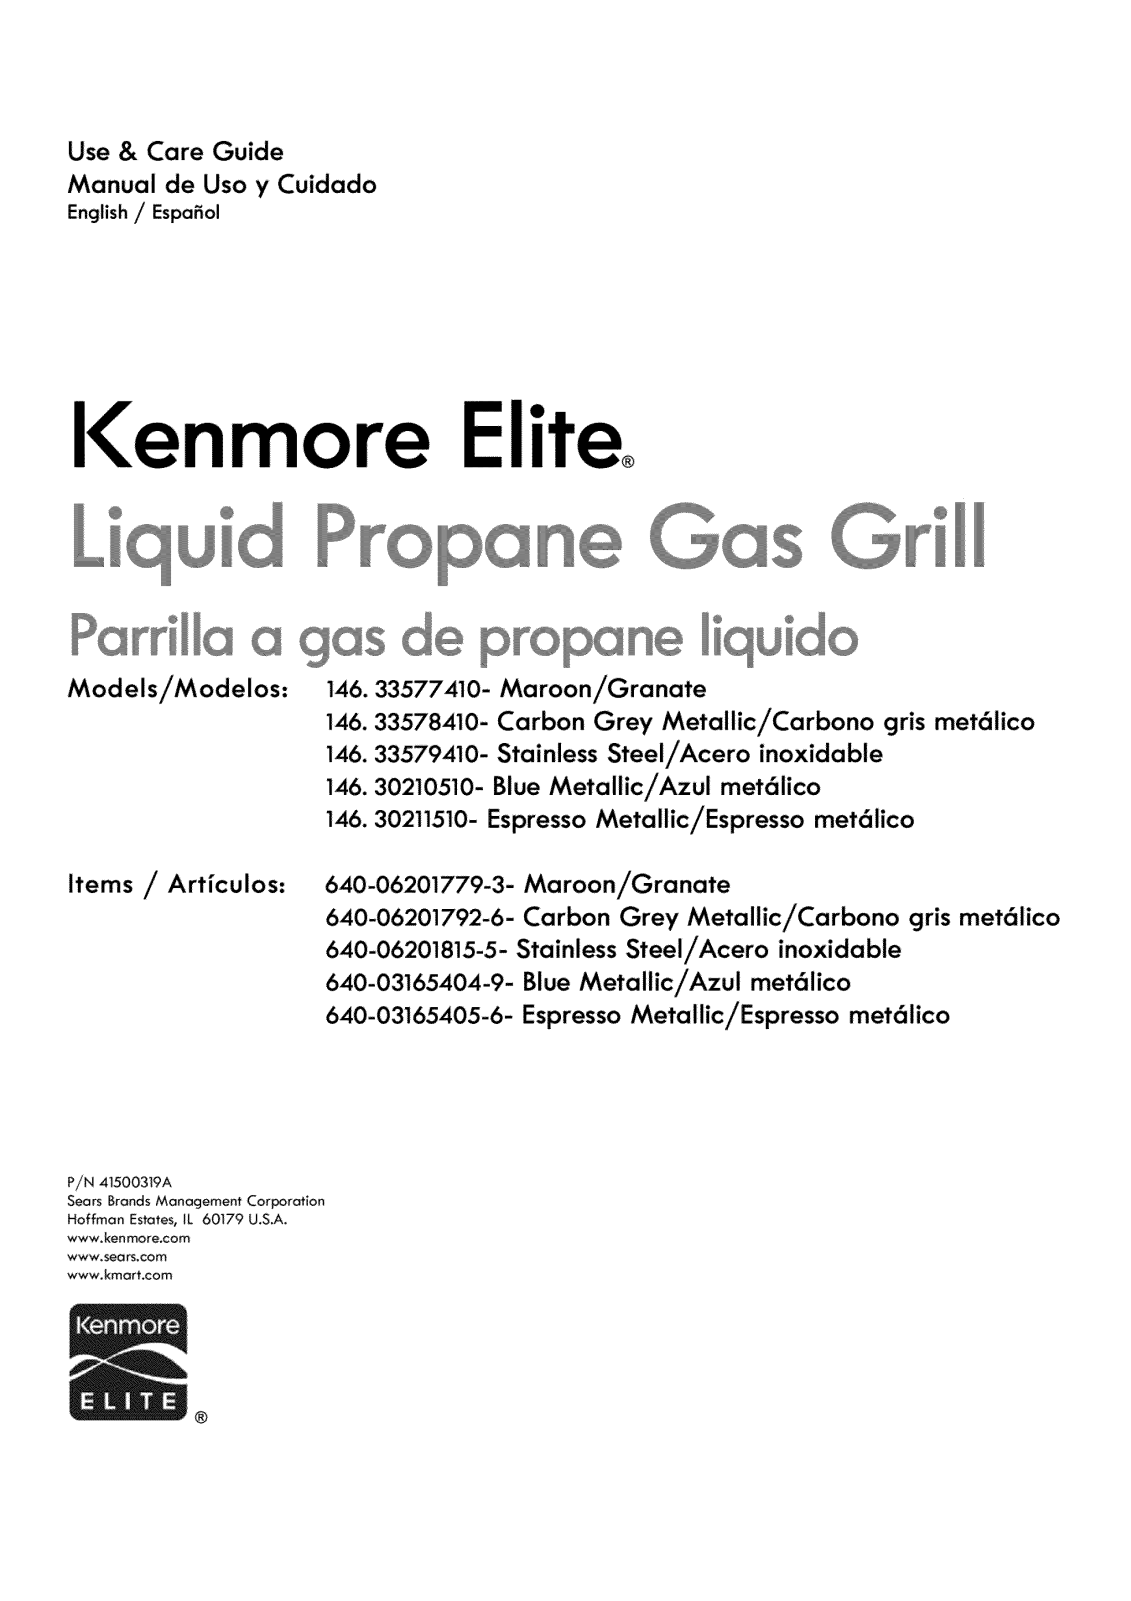 Kenmore Elite 14630210510, 14630211510, 14633577410, 14633578410, 14633579410 Owner’s Manual